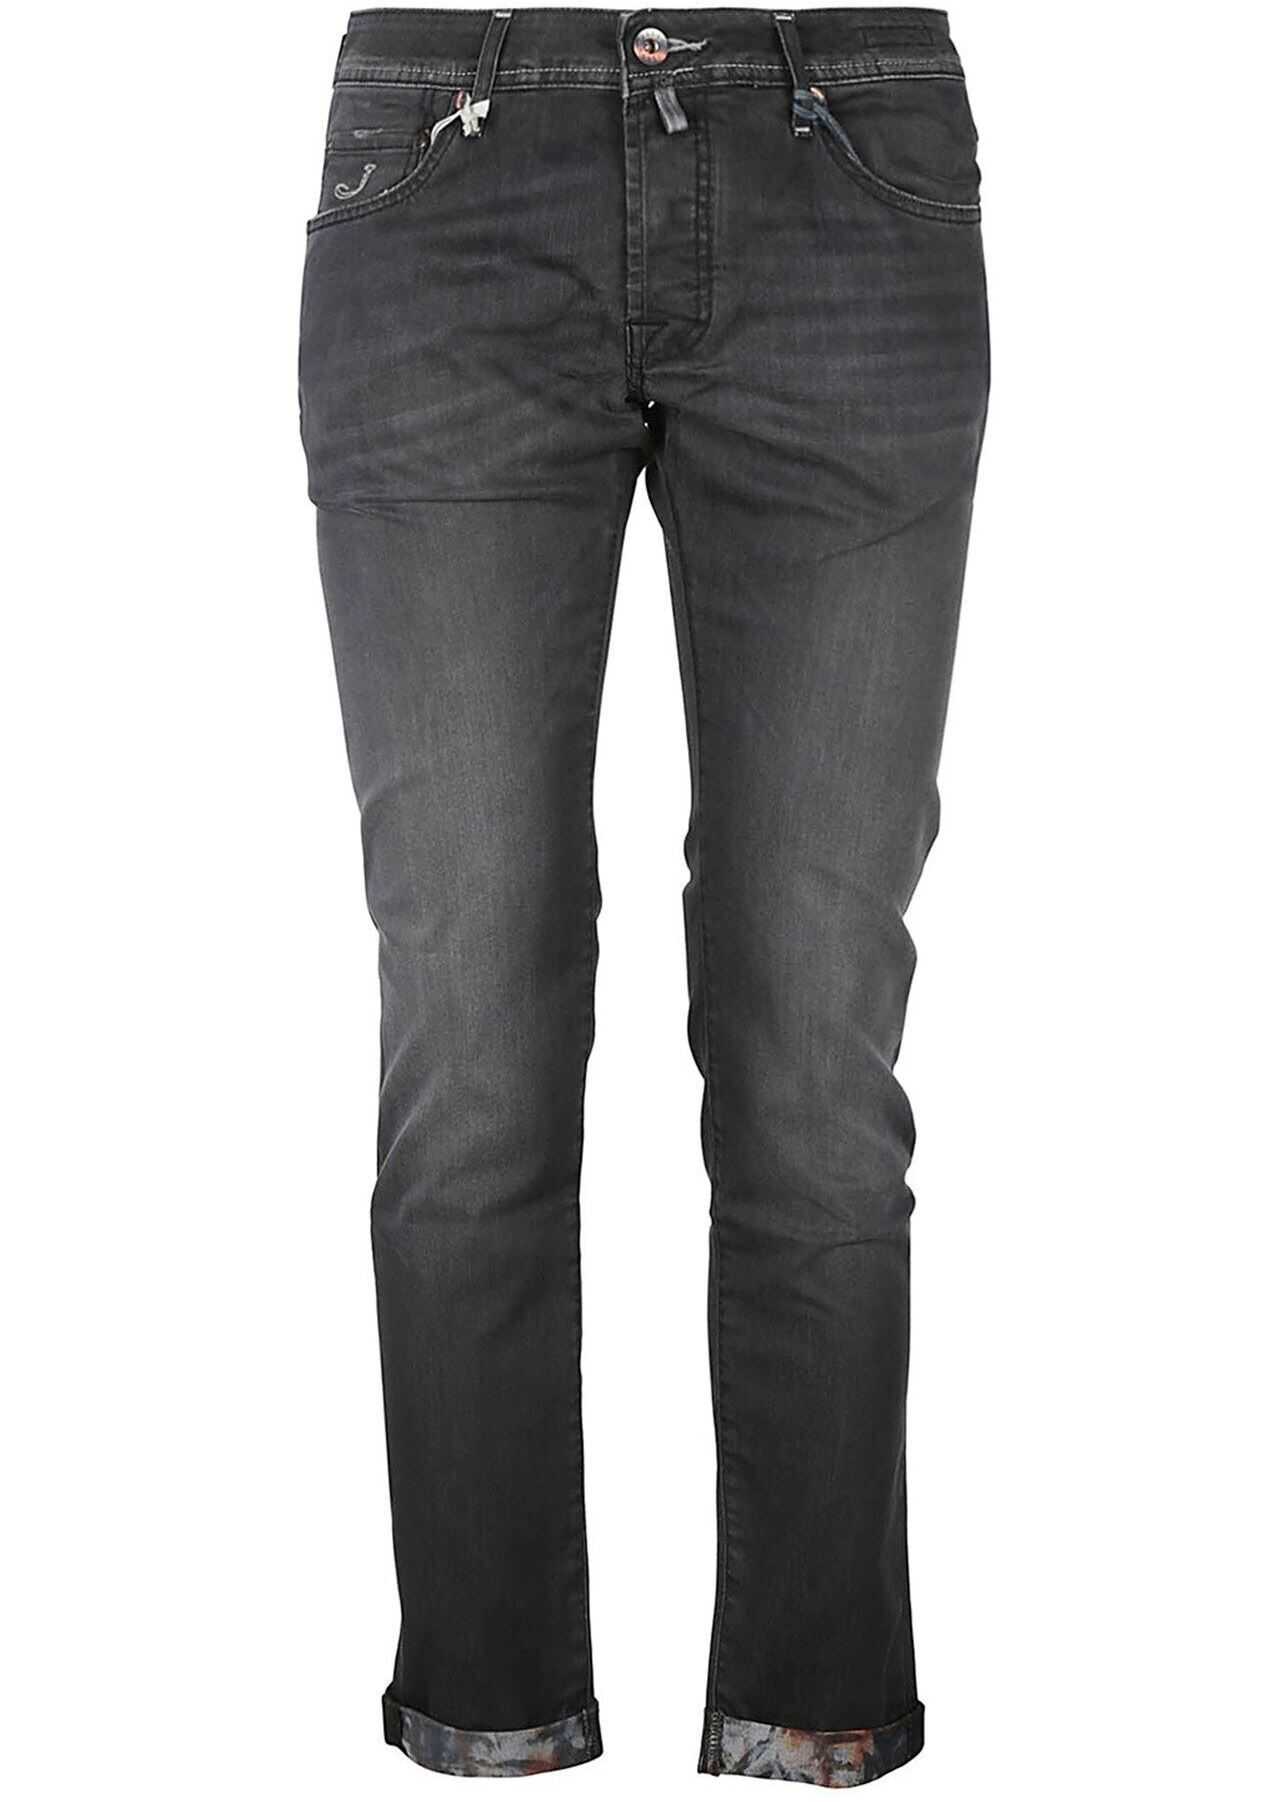 Jacob Cohen Natural Indigo Dyed Cotton Jeans In Grey J622SLIMCOMF02403W2B902 Grey